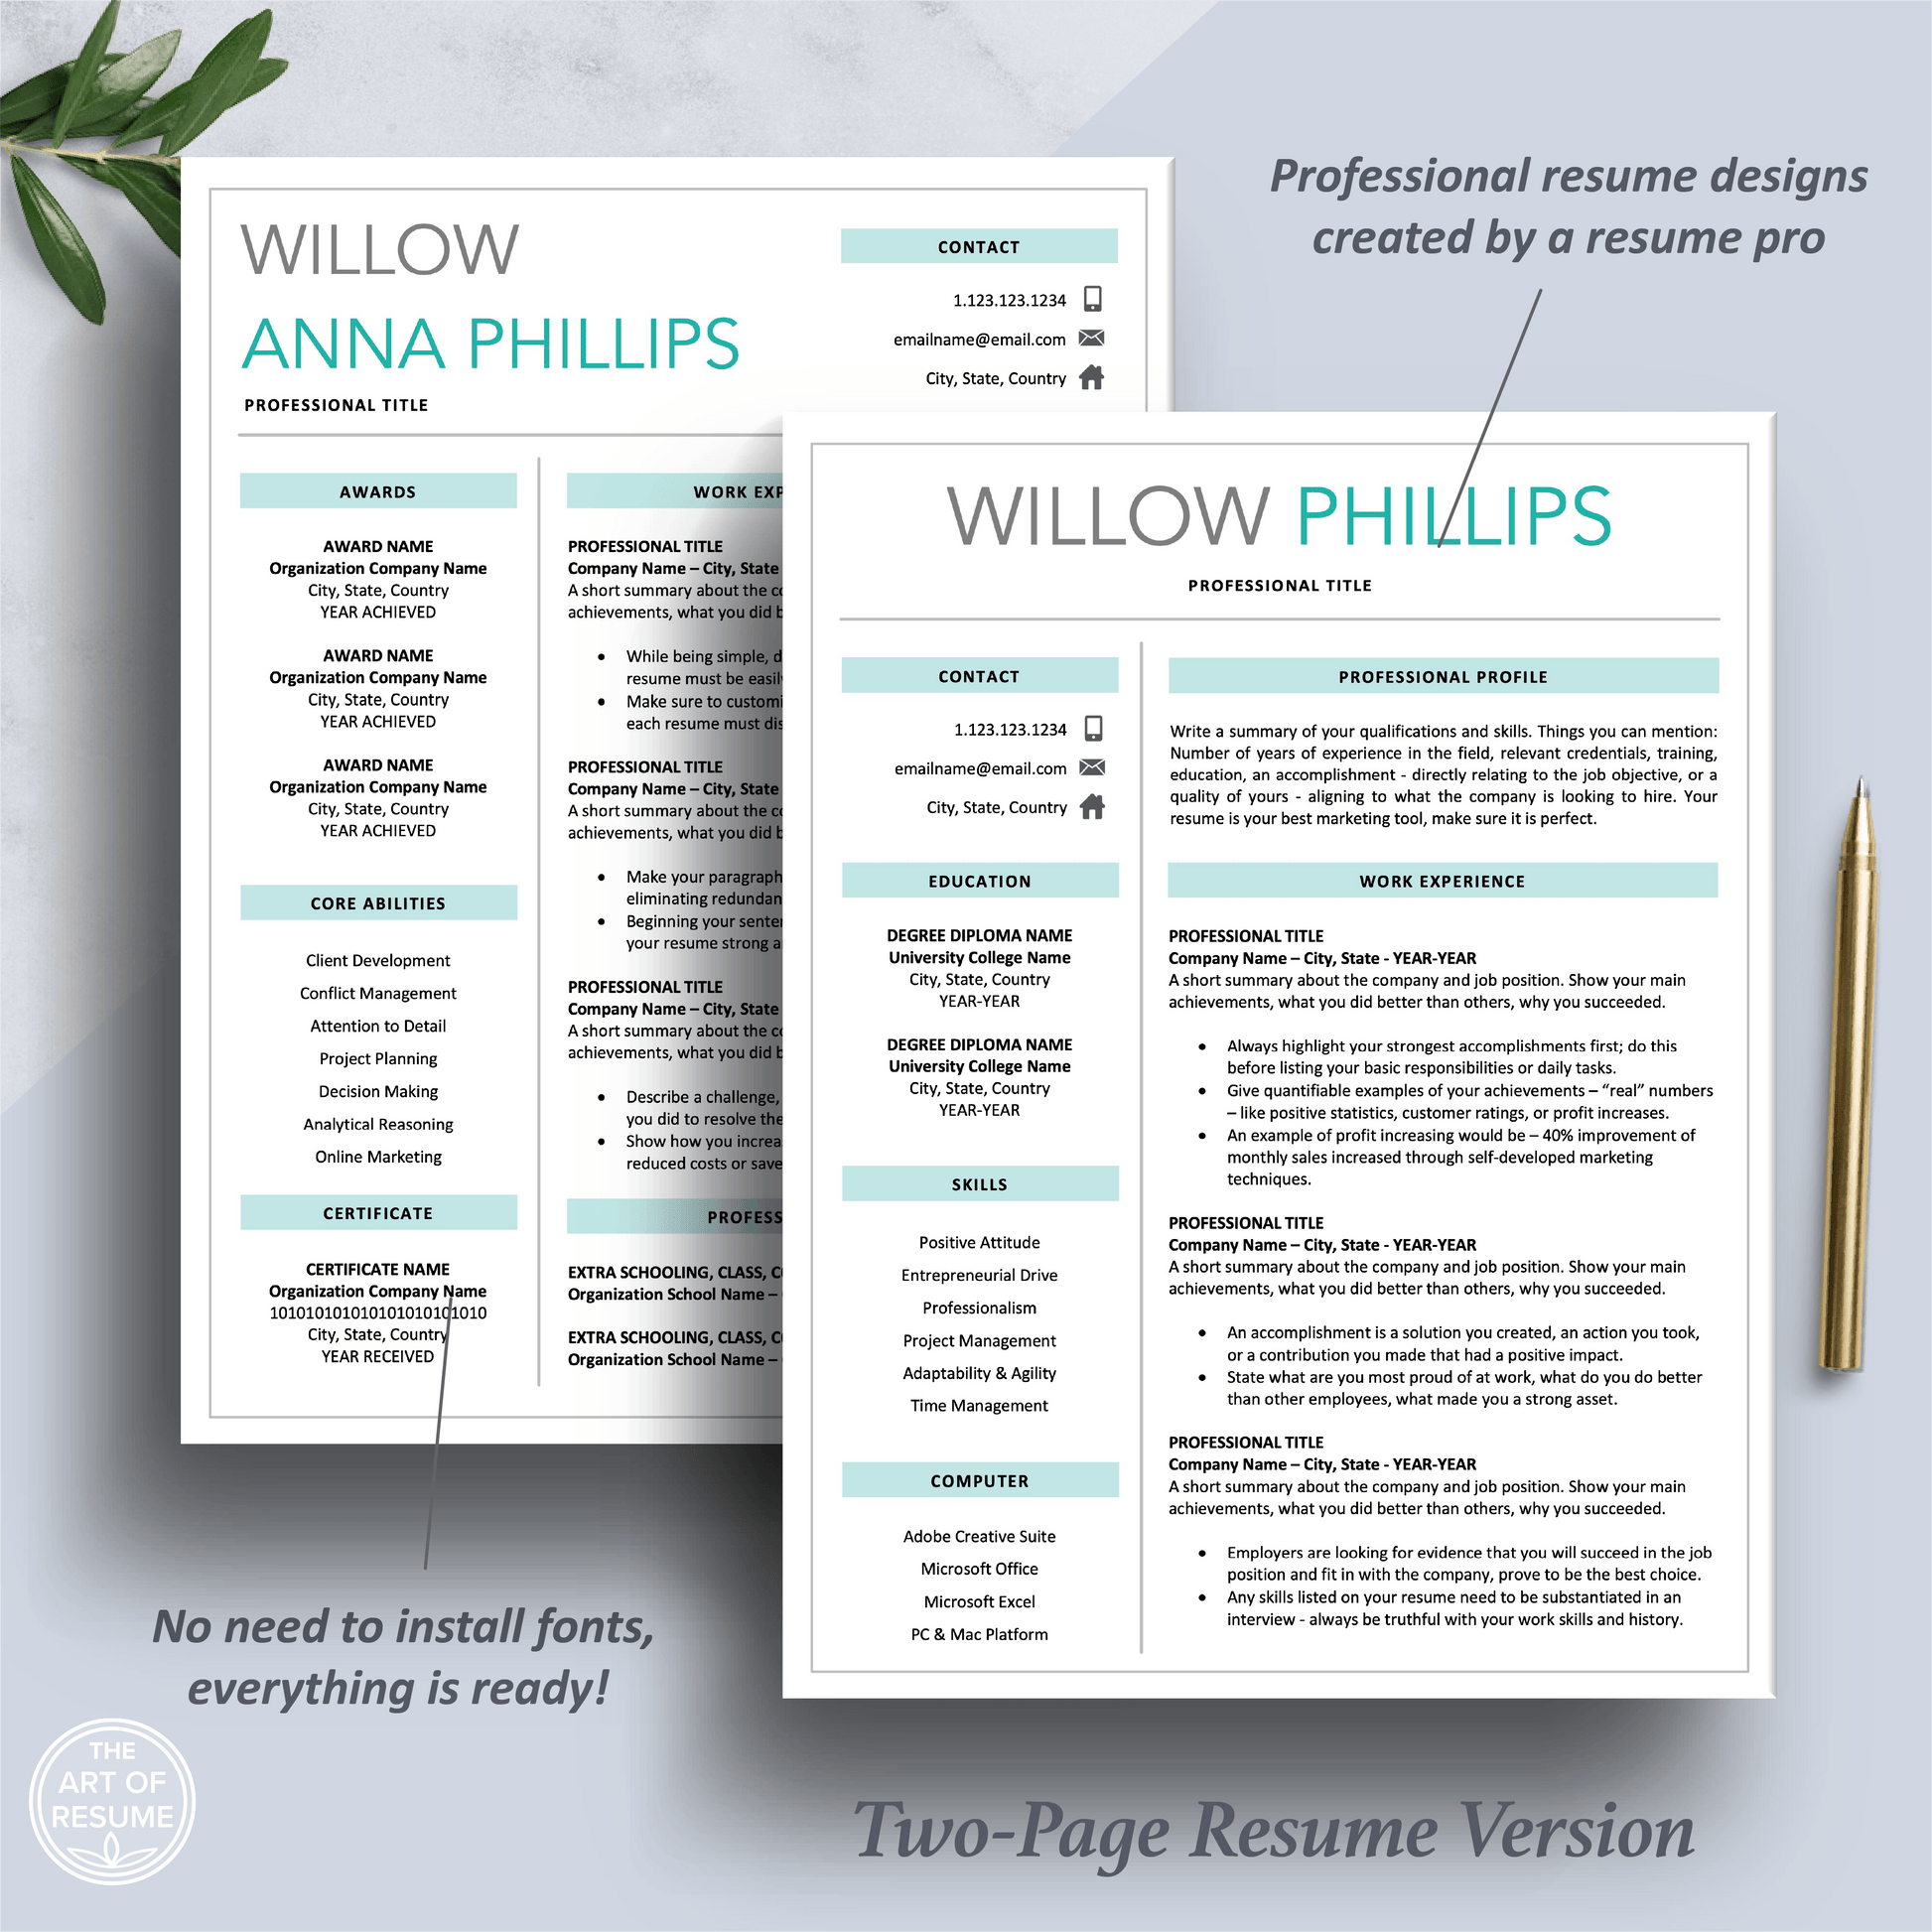 Professional Resume Template Bundles, Executive Resume Design - The Art of Resume